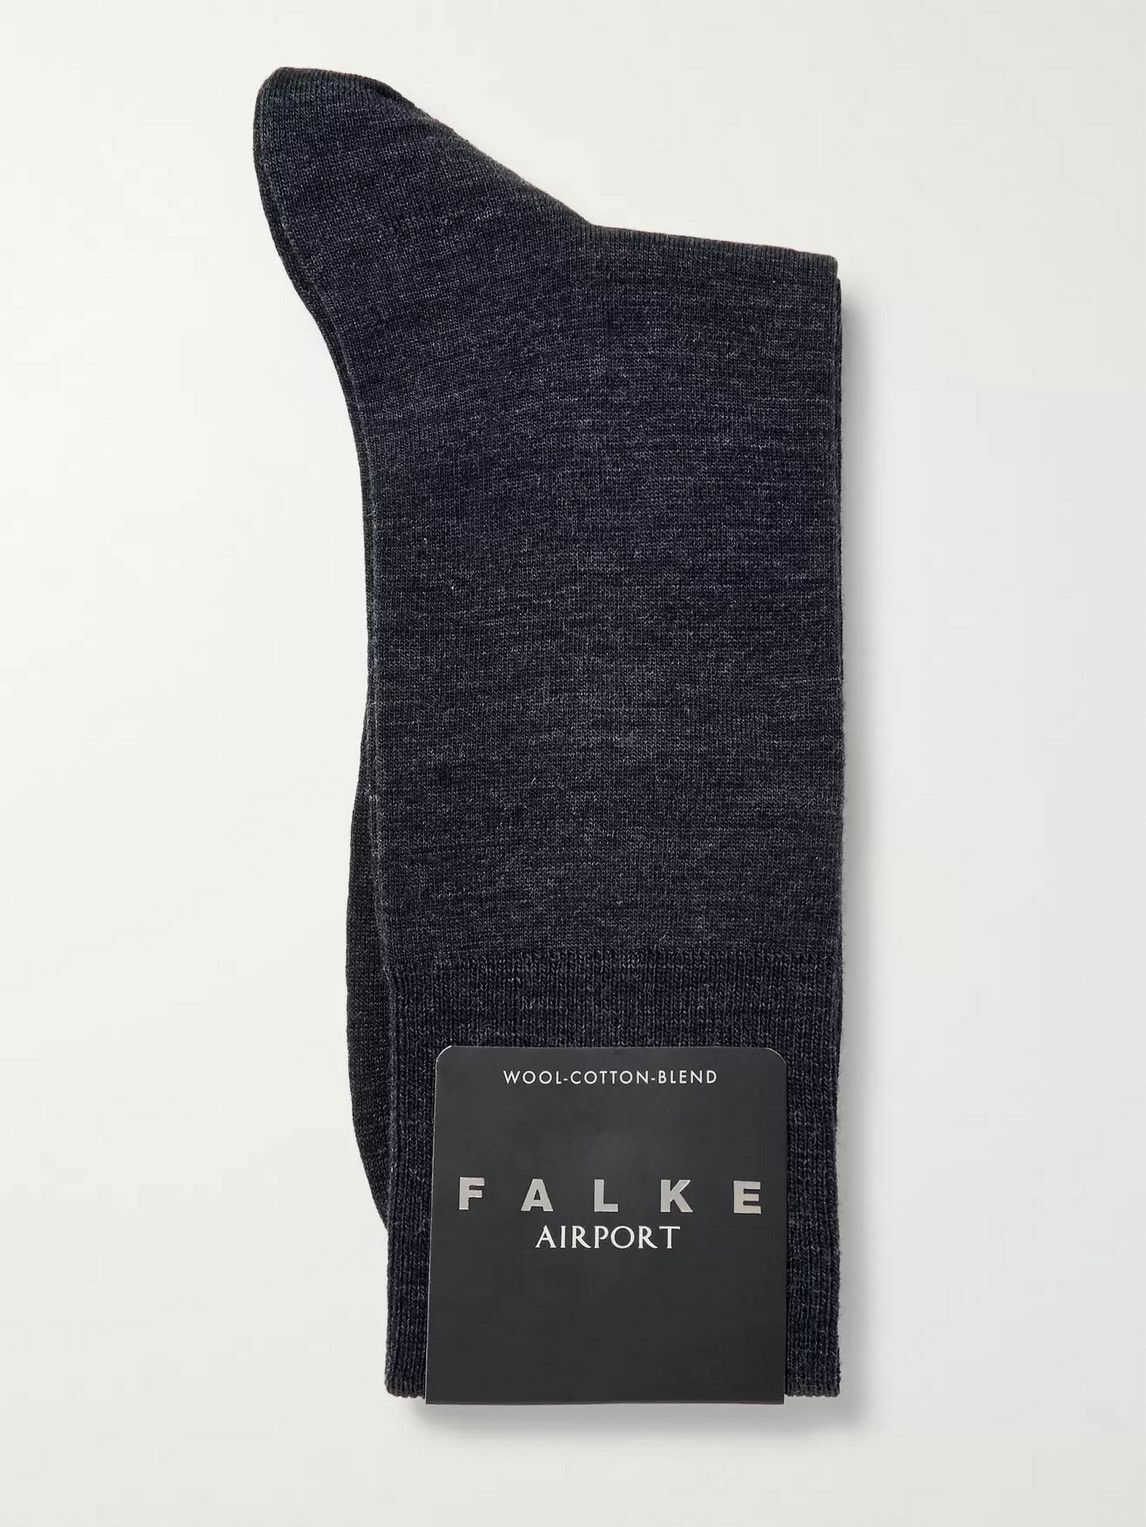 Falke - Airport Mélange Virgin Wool-Blend Socks - Gray FALKE Ergonomic ...